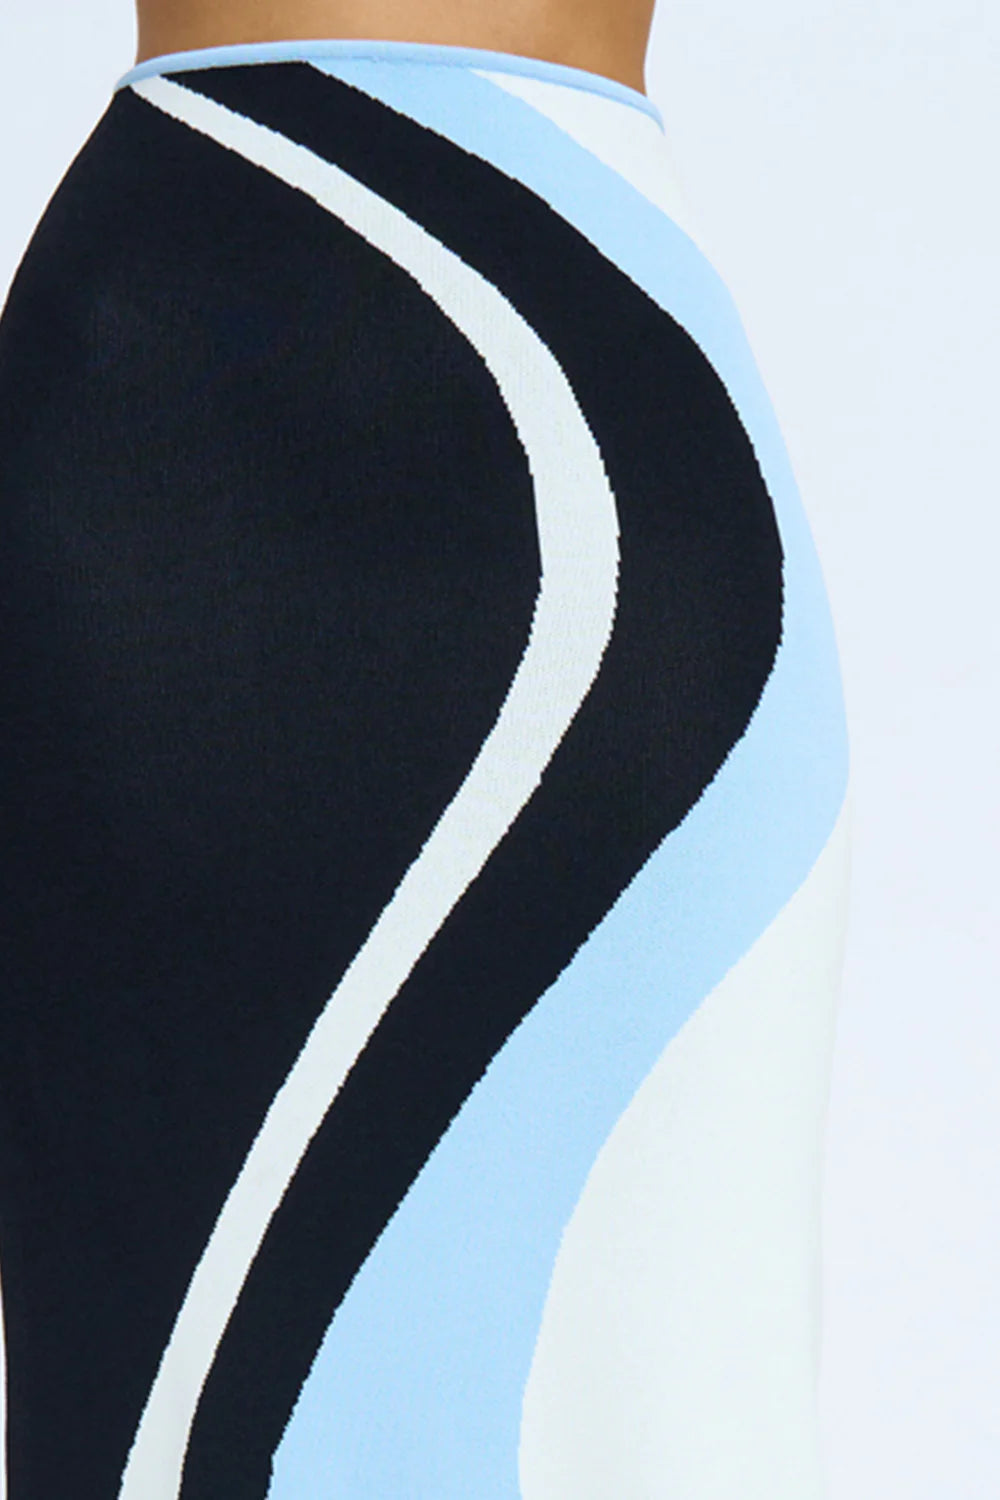 Kira curve knit skirt, black blue Ivory